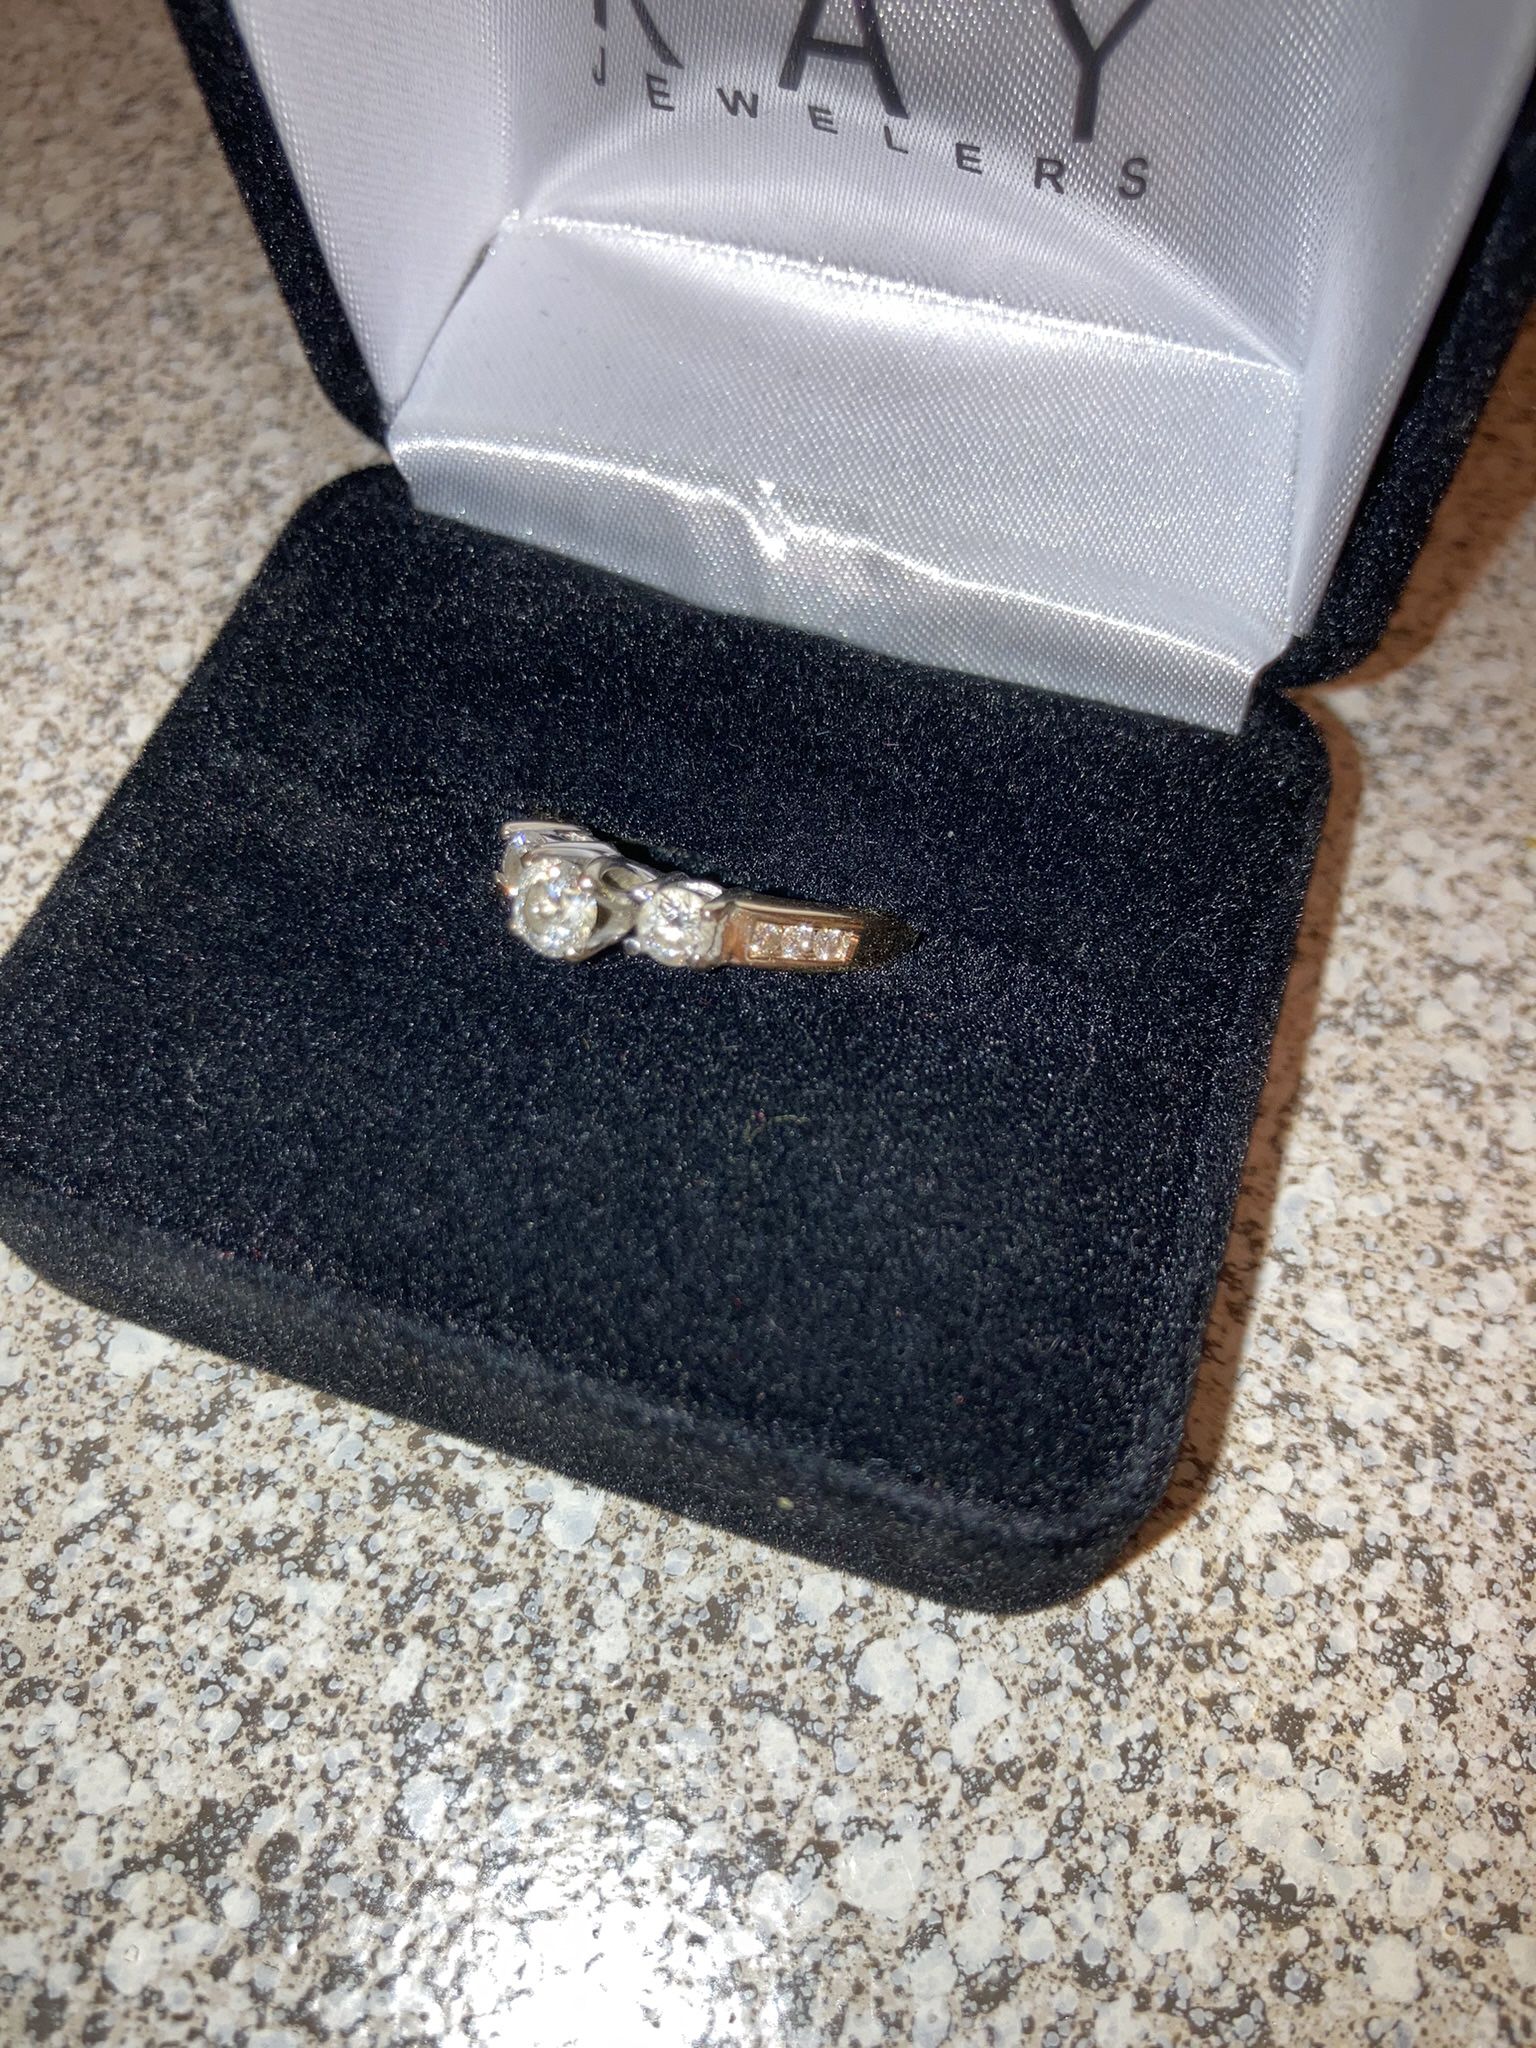 Engagement Ring Diamond